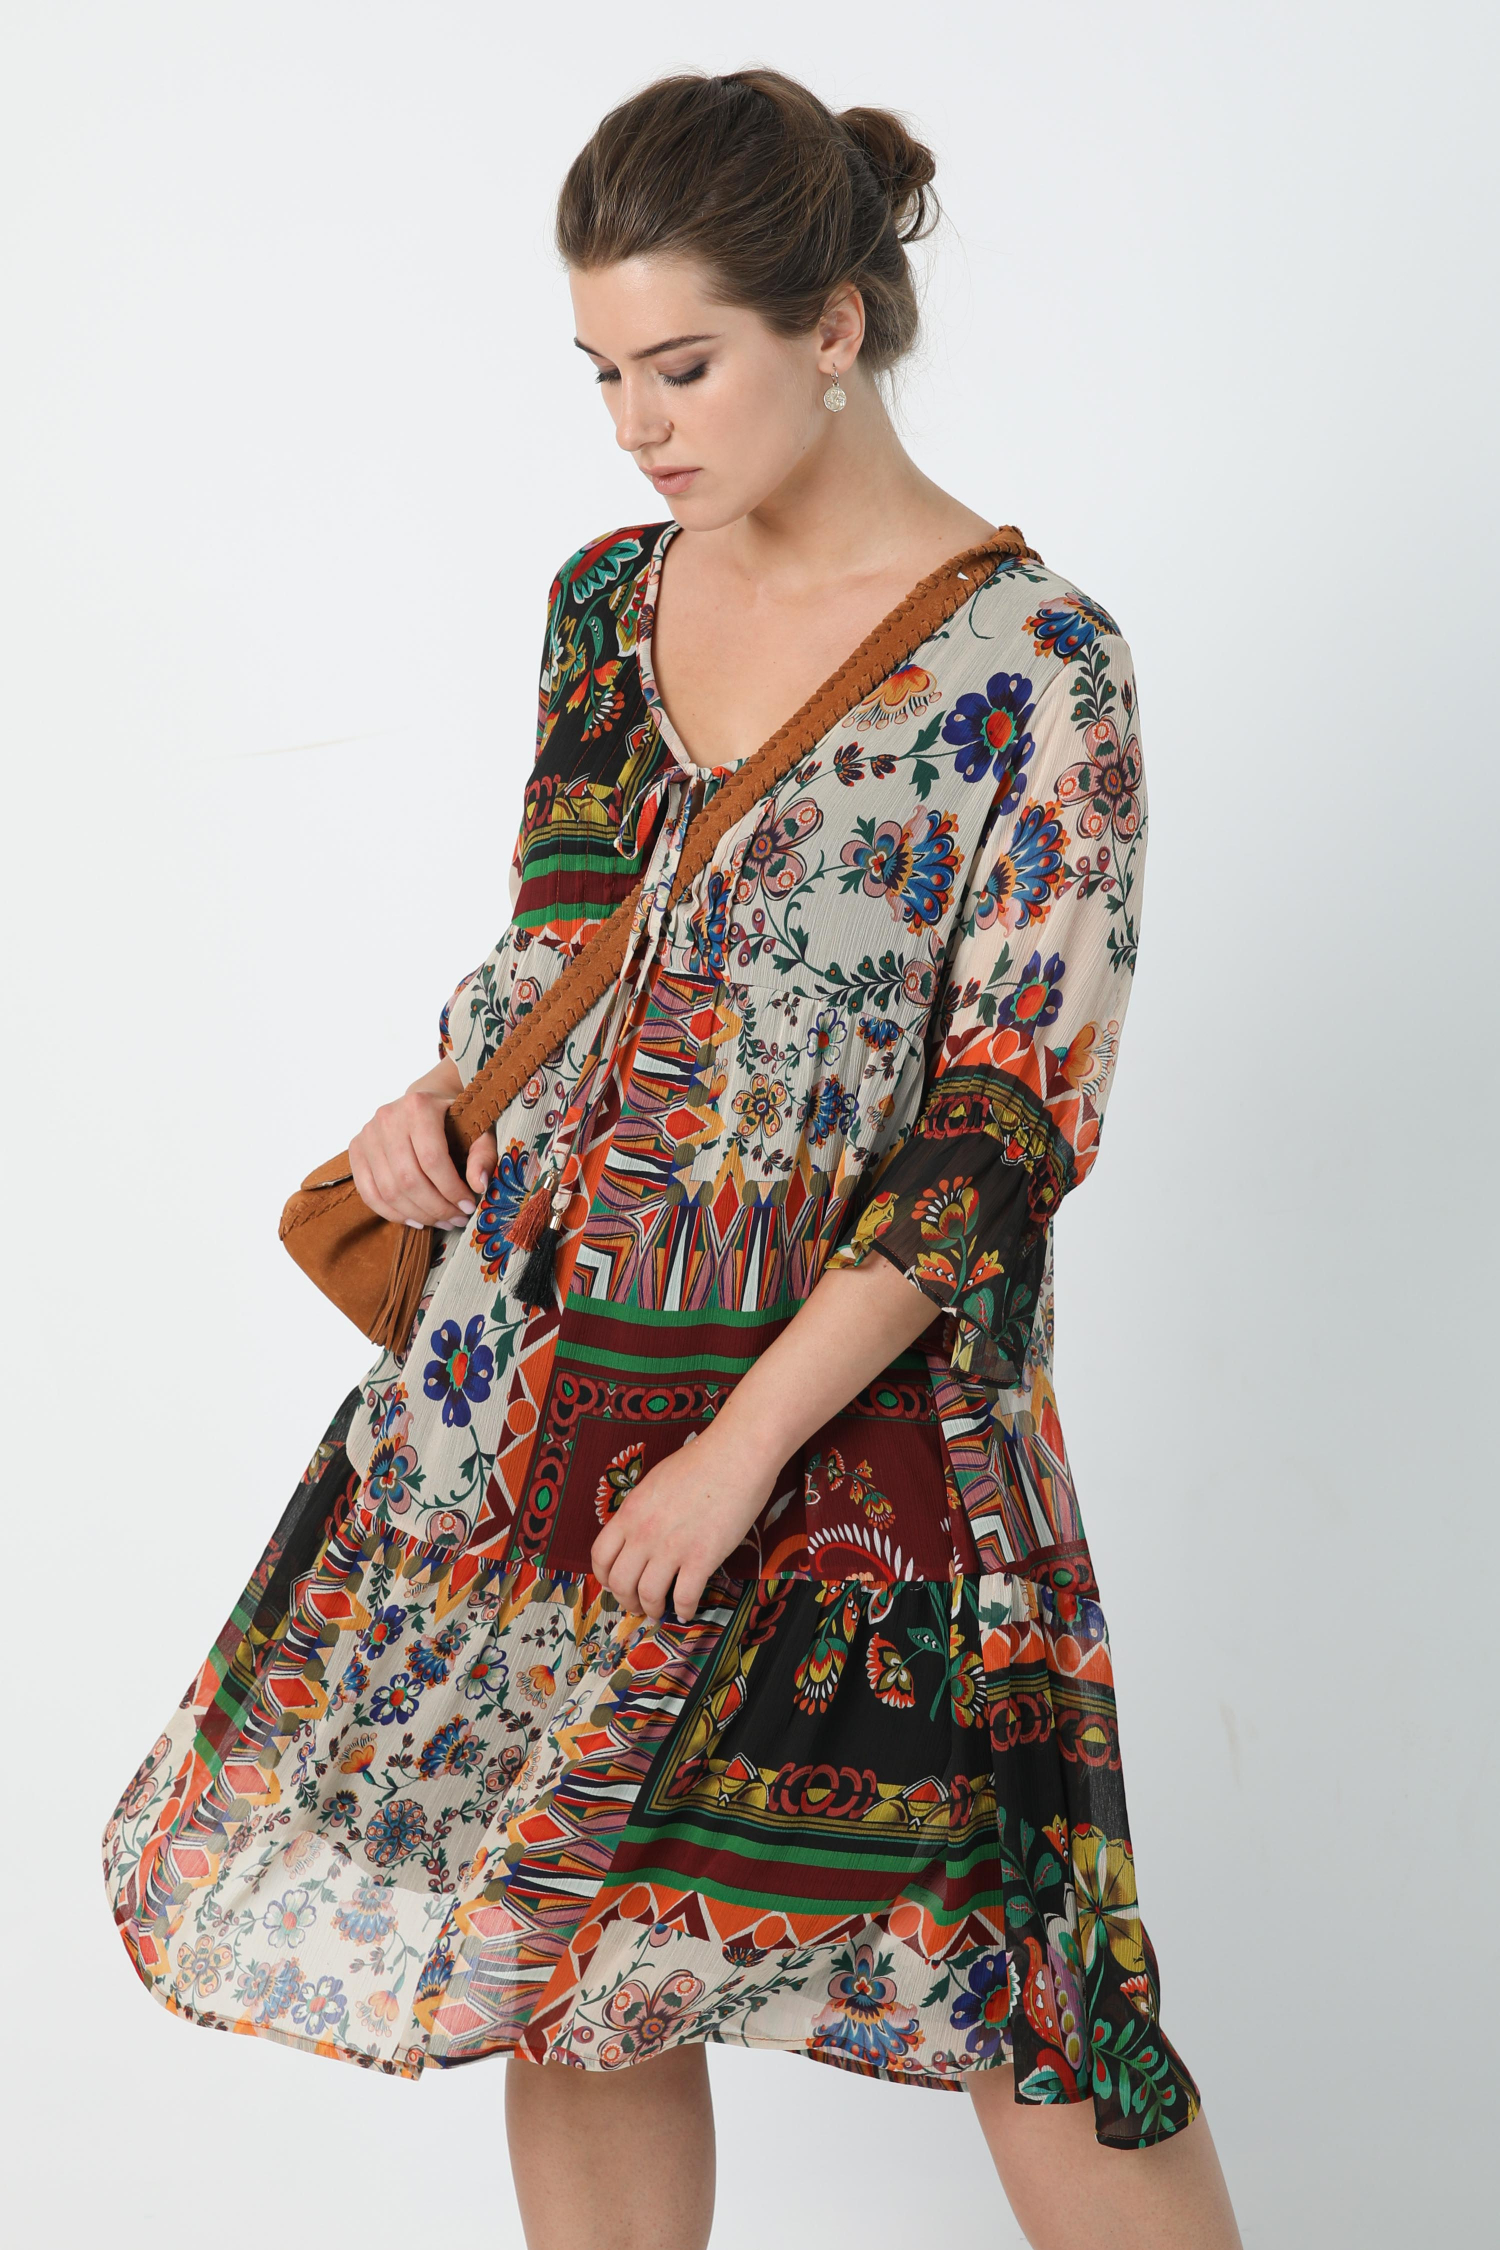 Bohemian style mid-length dress in veil printed with oeko-tex fabric